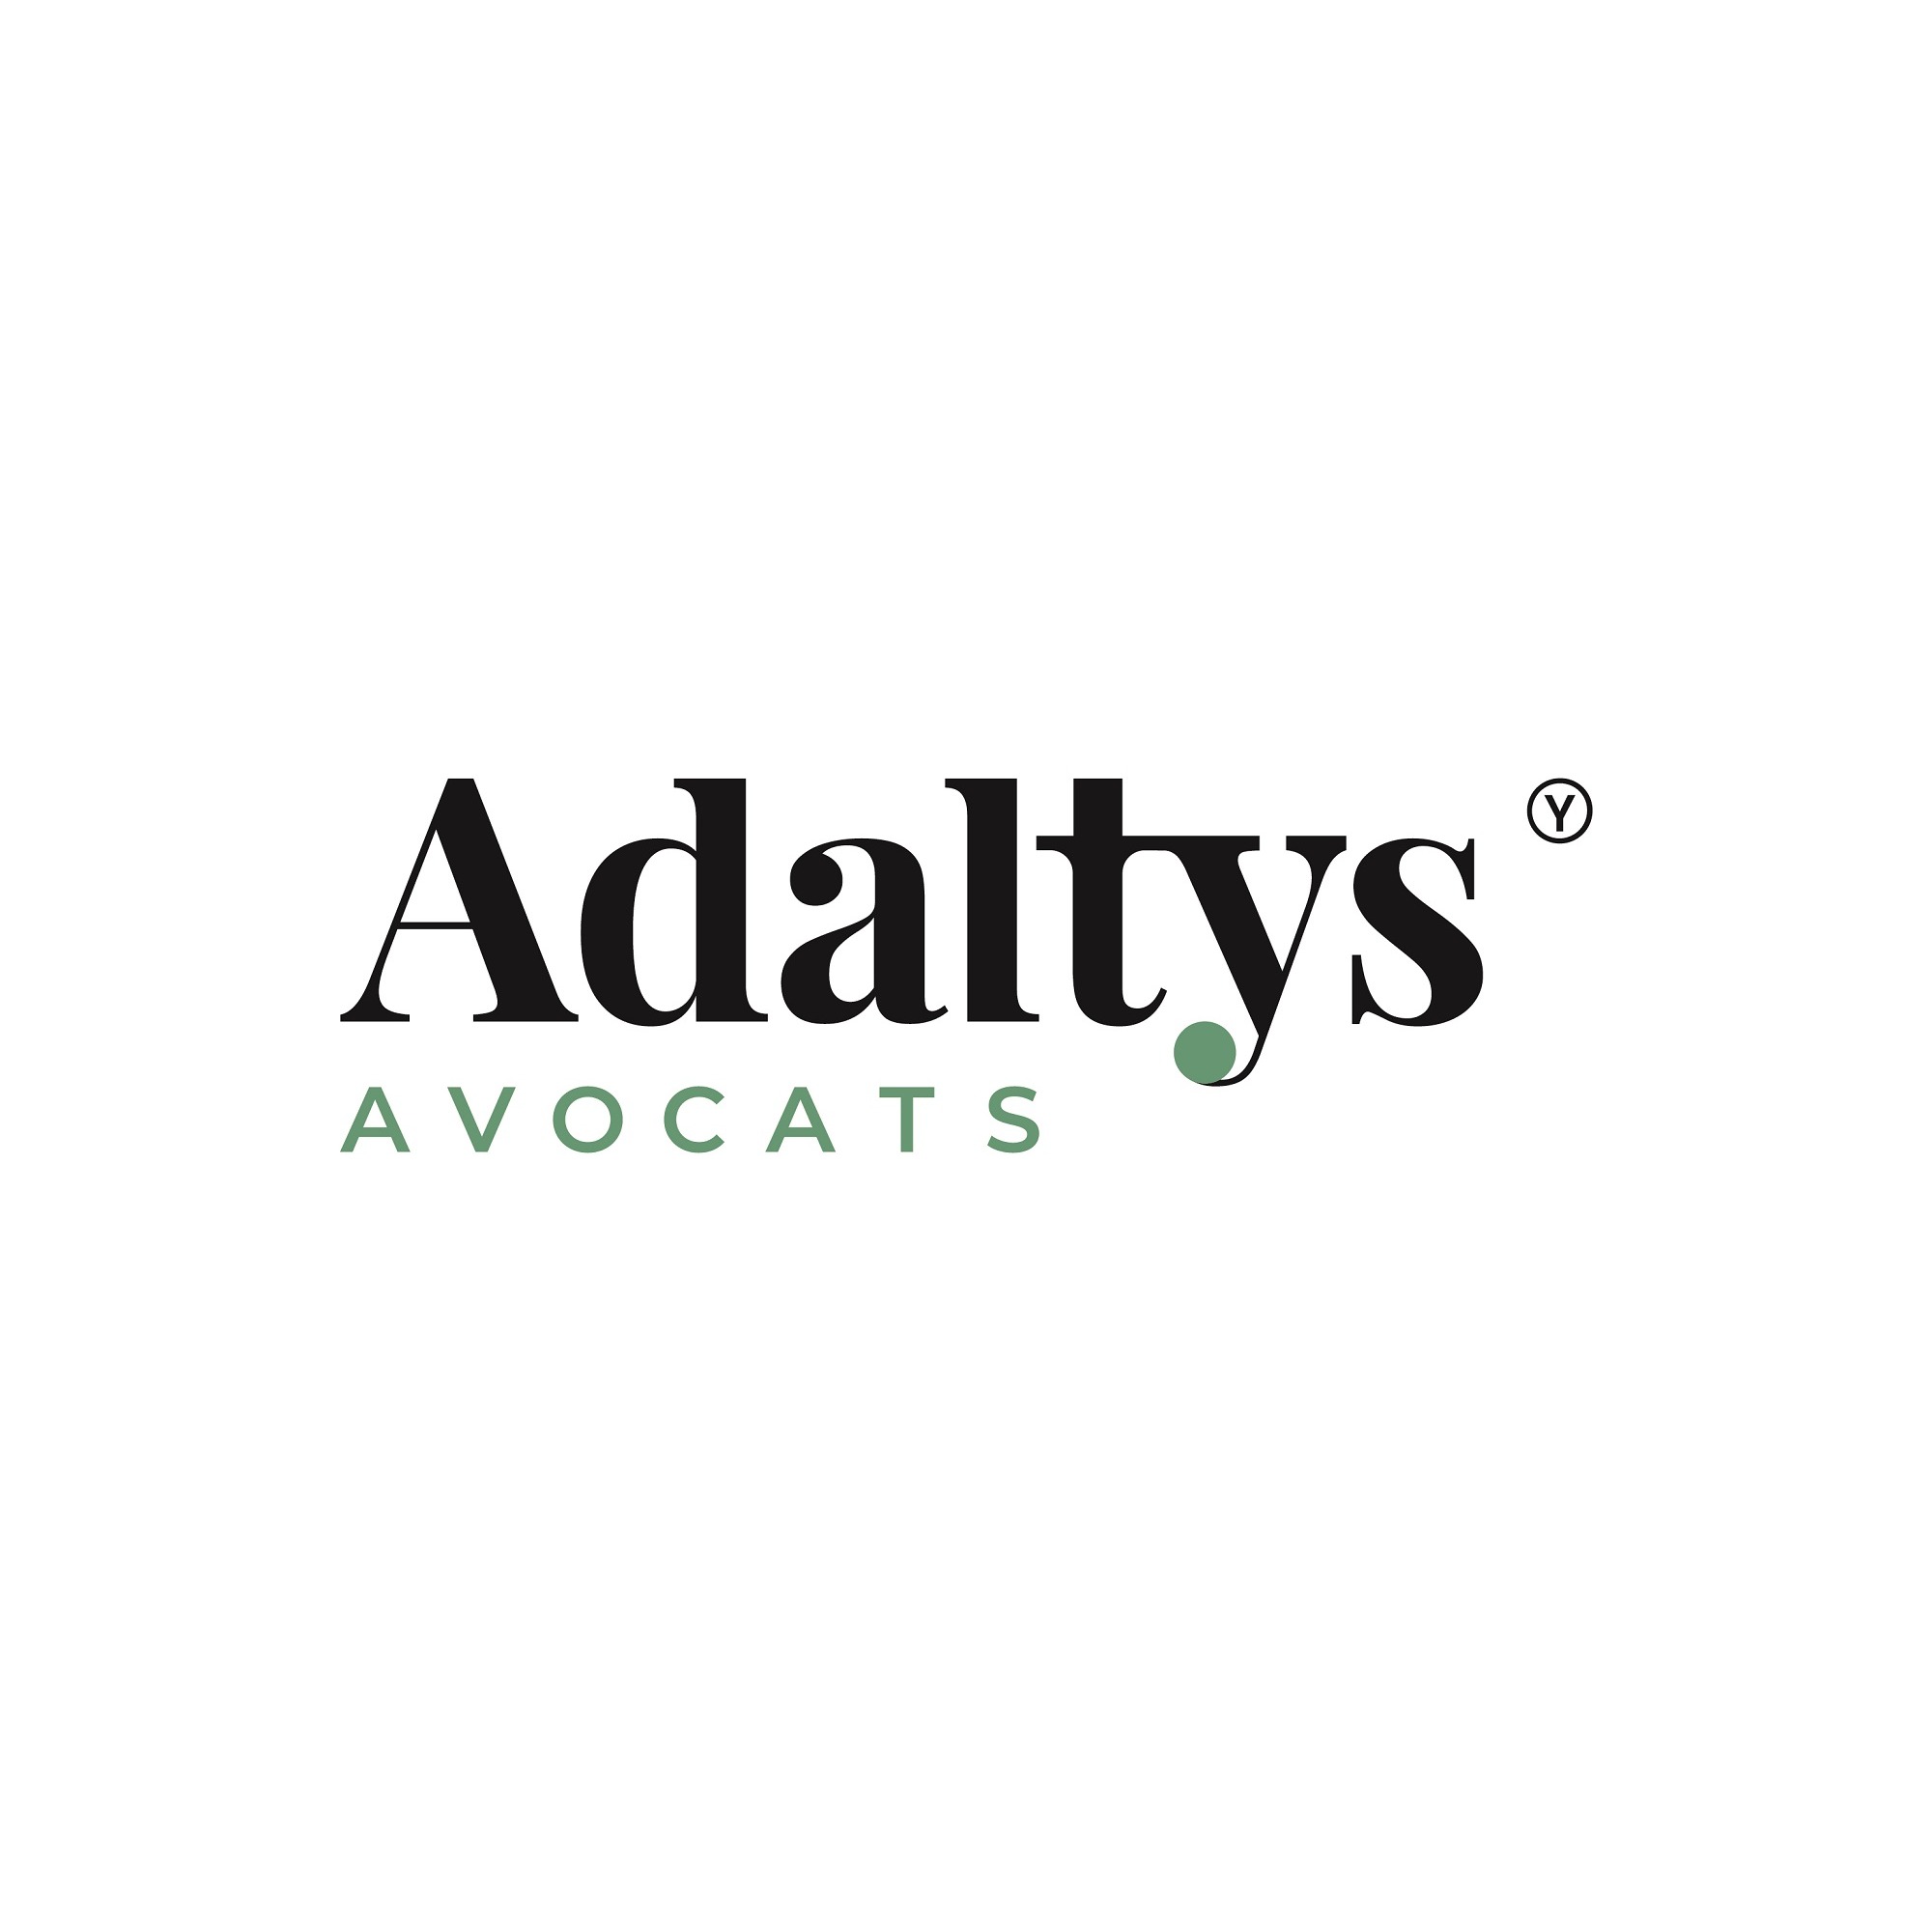 the Adaltys Avocats logo.